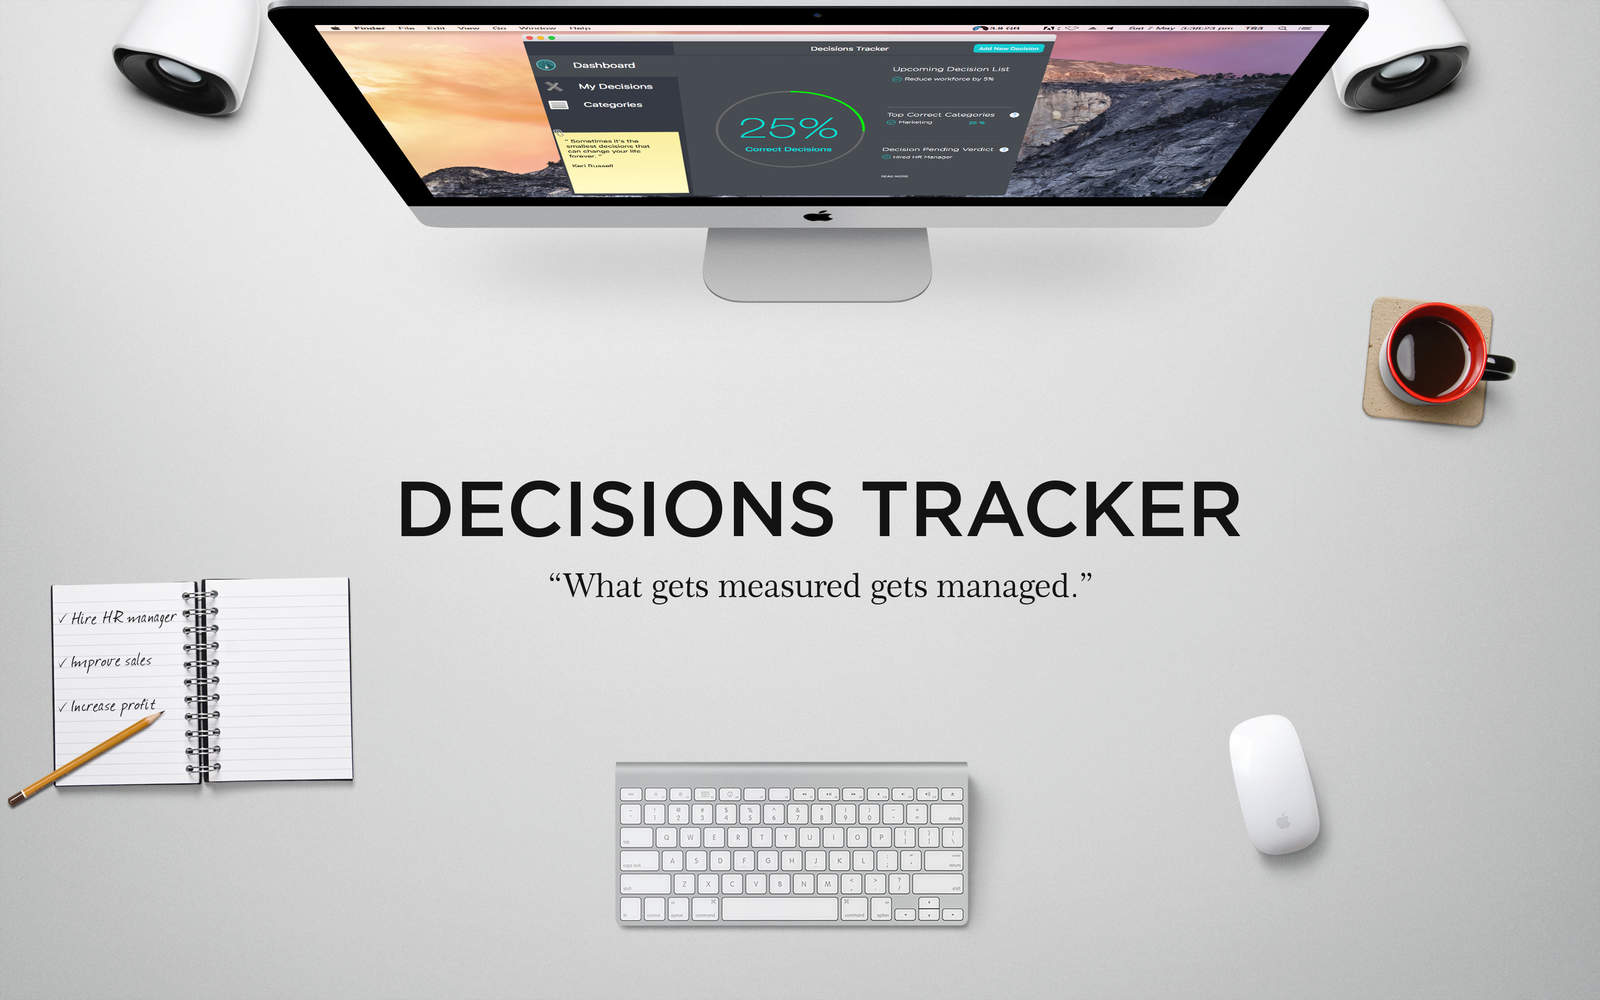 Decision Tracker 1.1 : Main Window